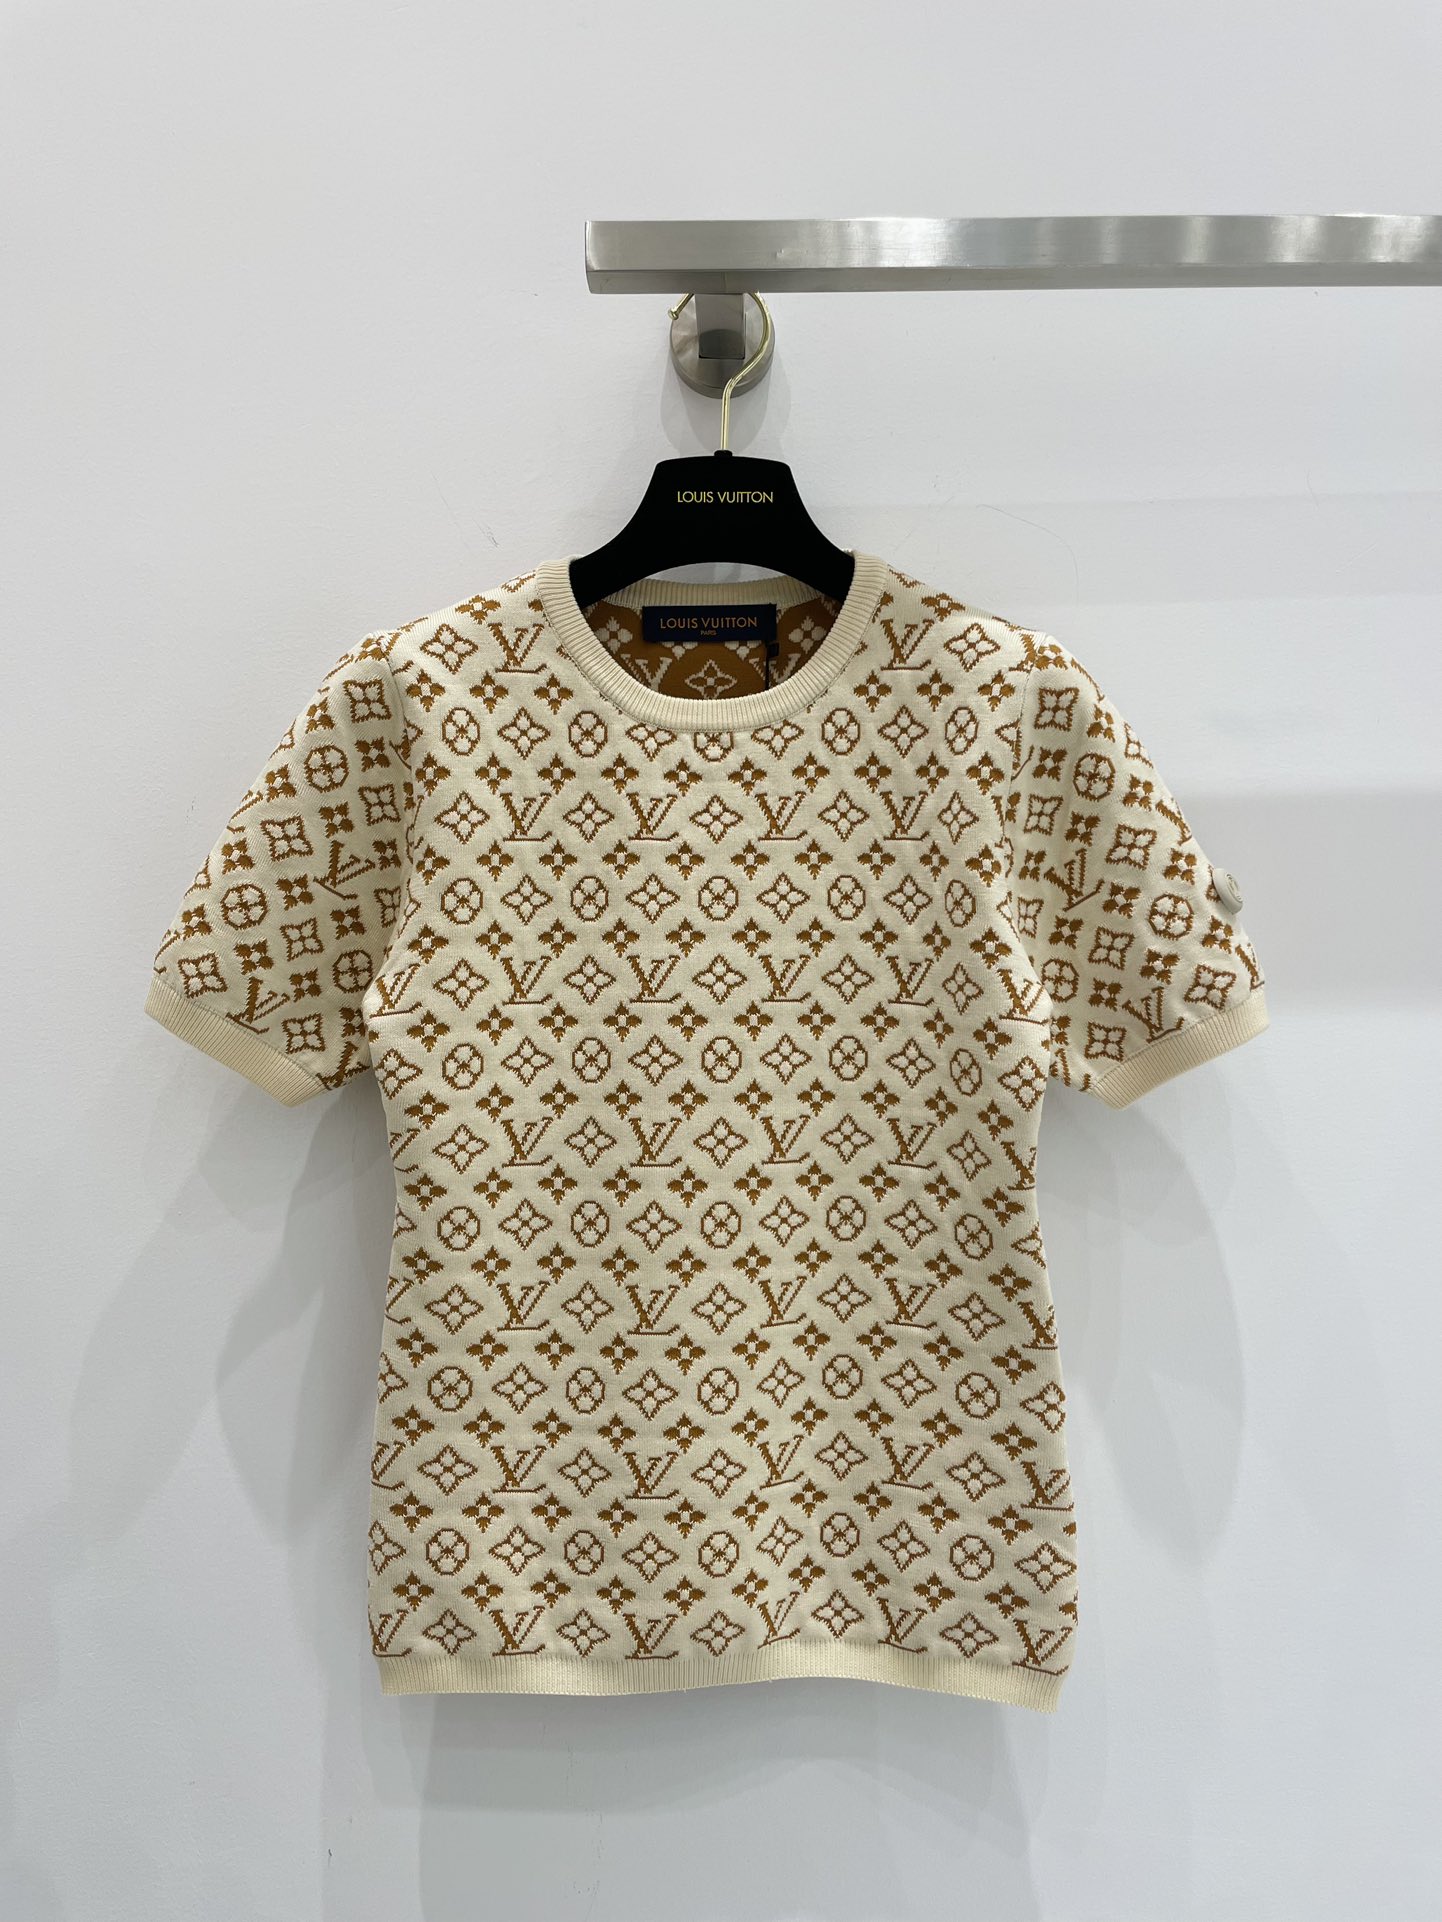 Louis Vuitton Clothing T-Shirt Beige White Short Sleeve